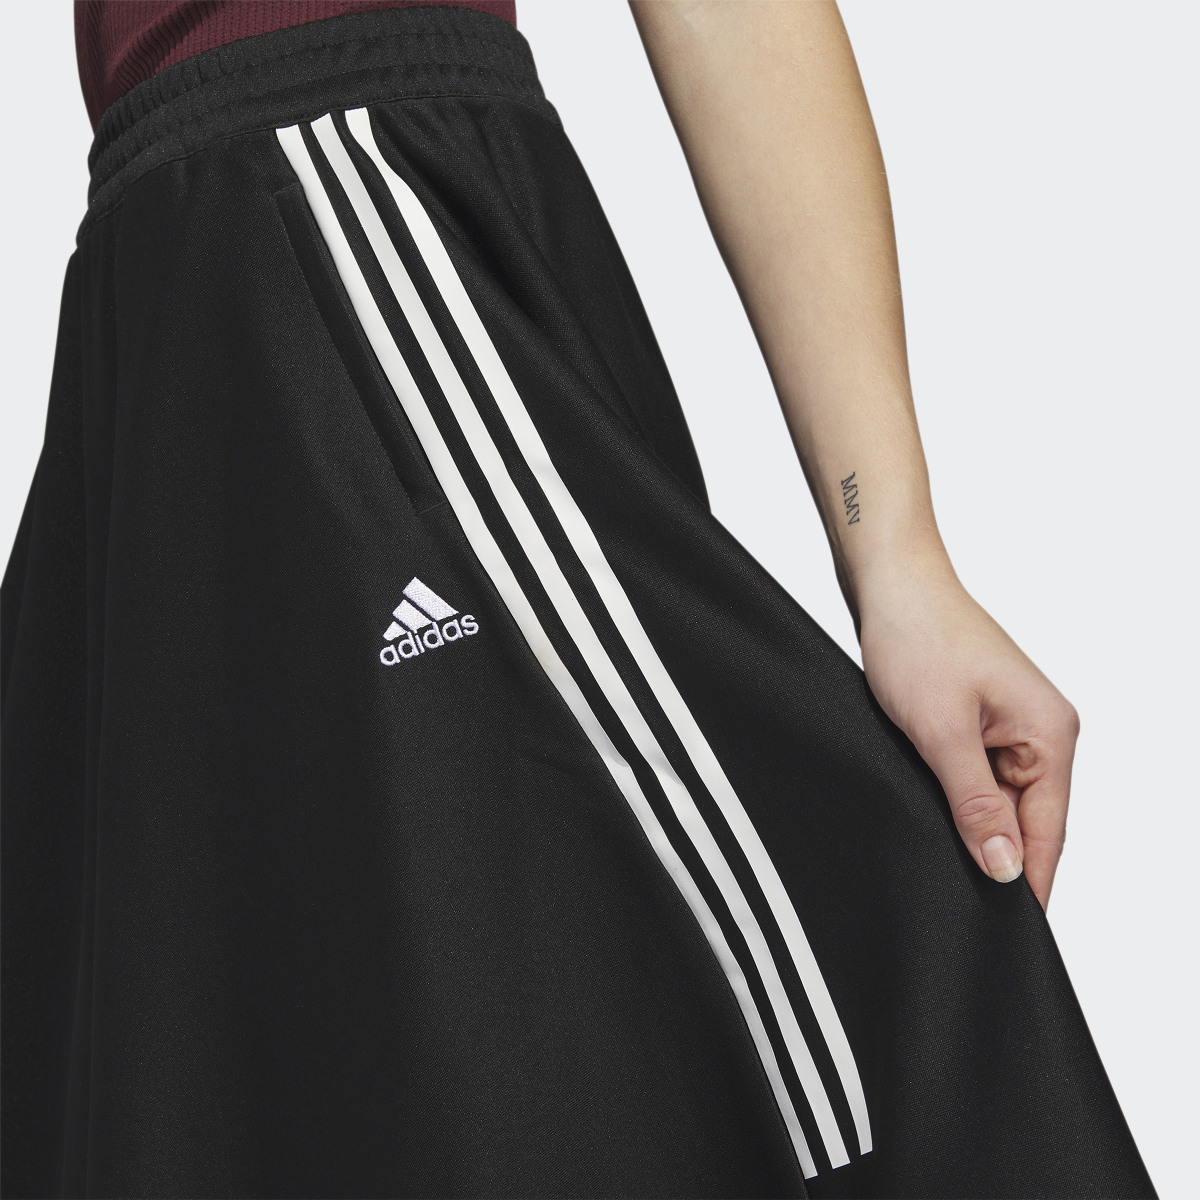 Adidas Track Skirt. 5